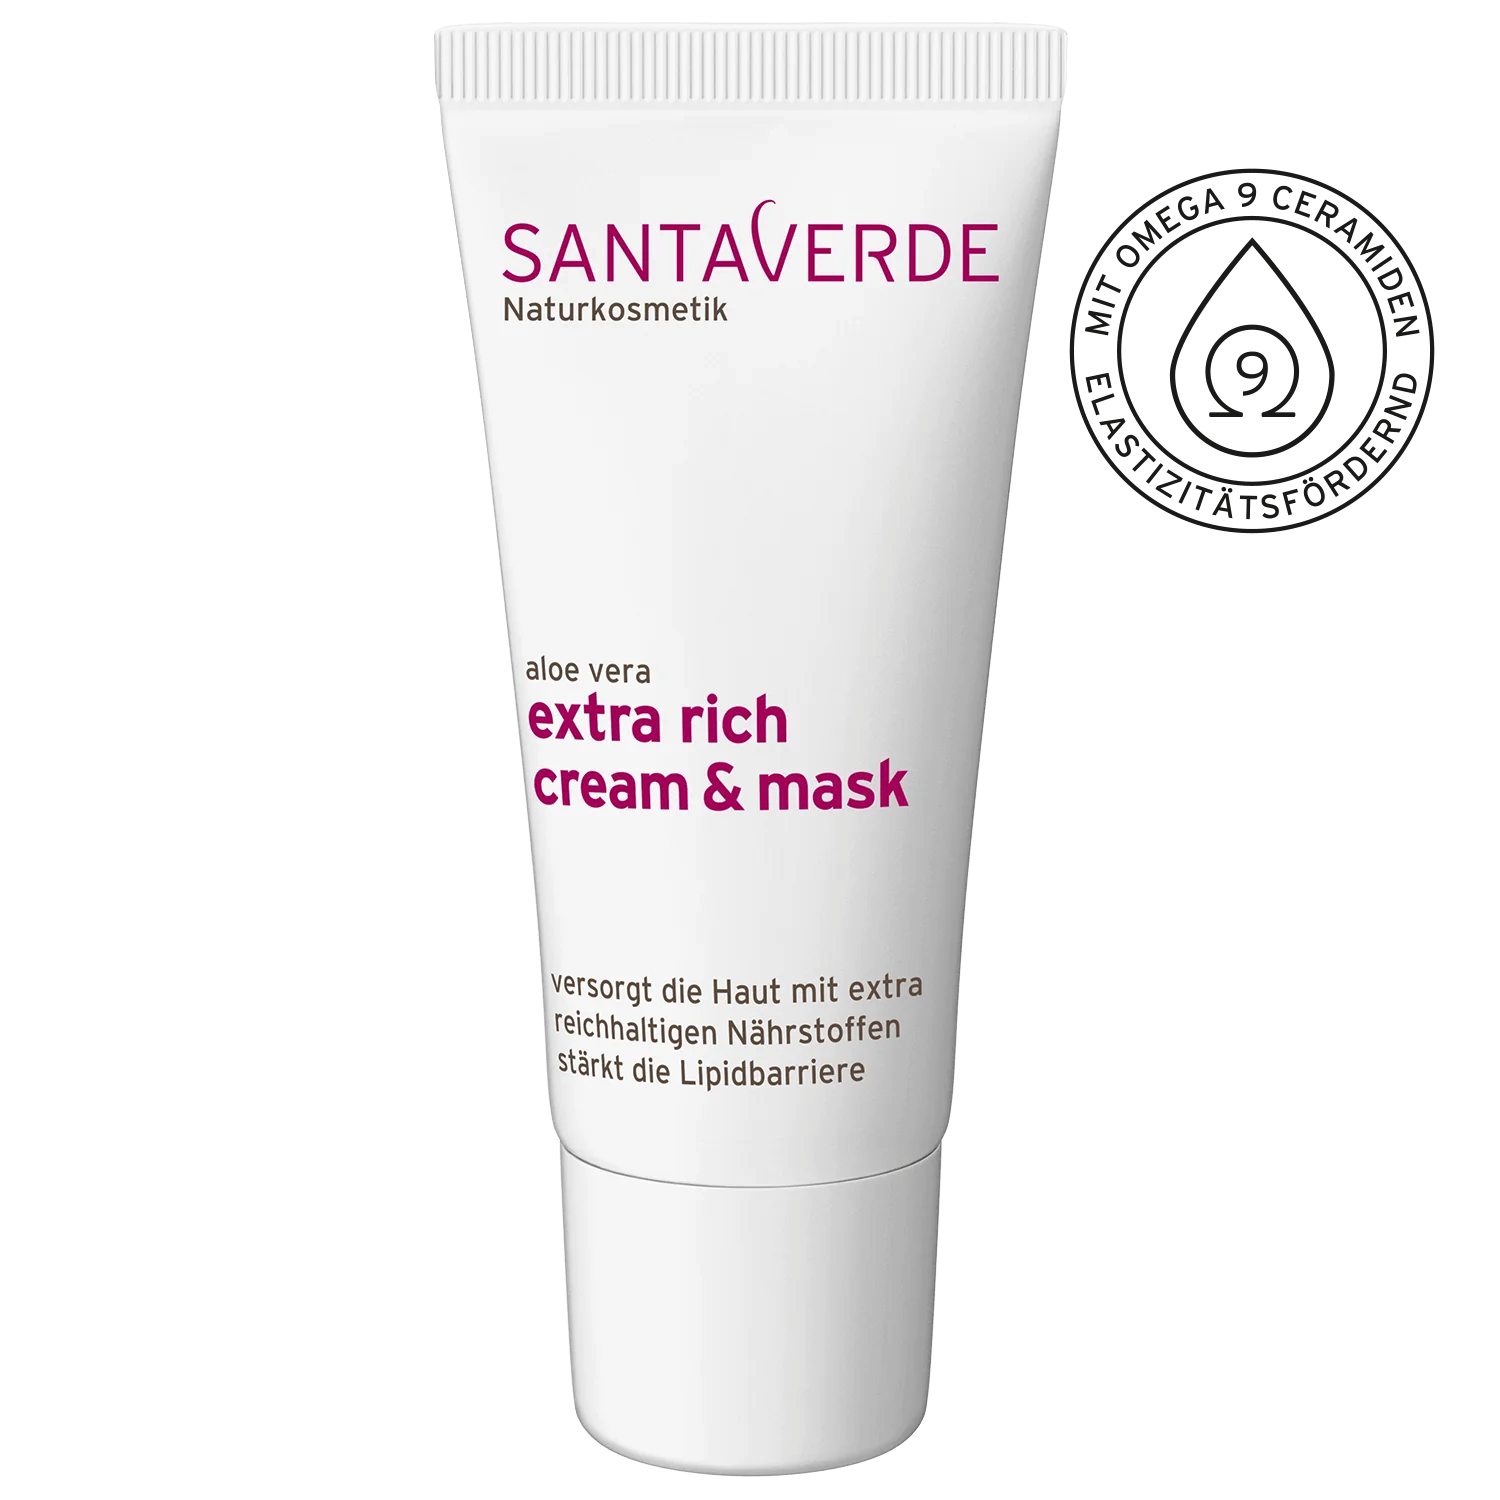 Santaverde extra rich cream & mask | 30ml | Aloe Vera